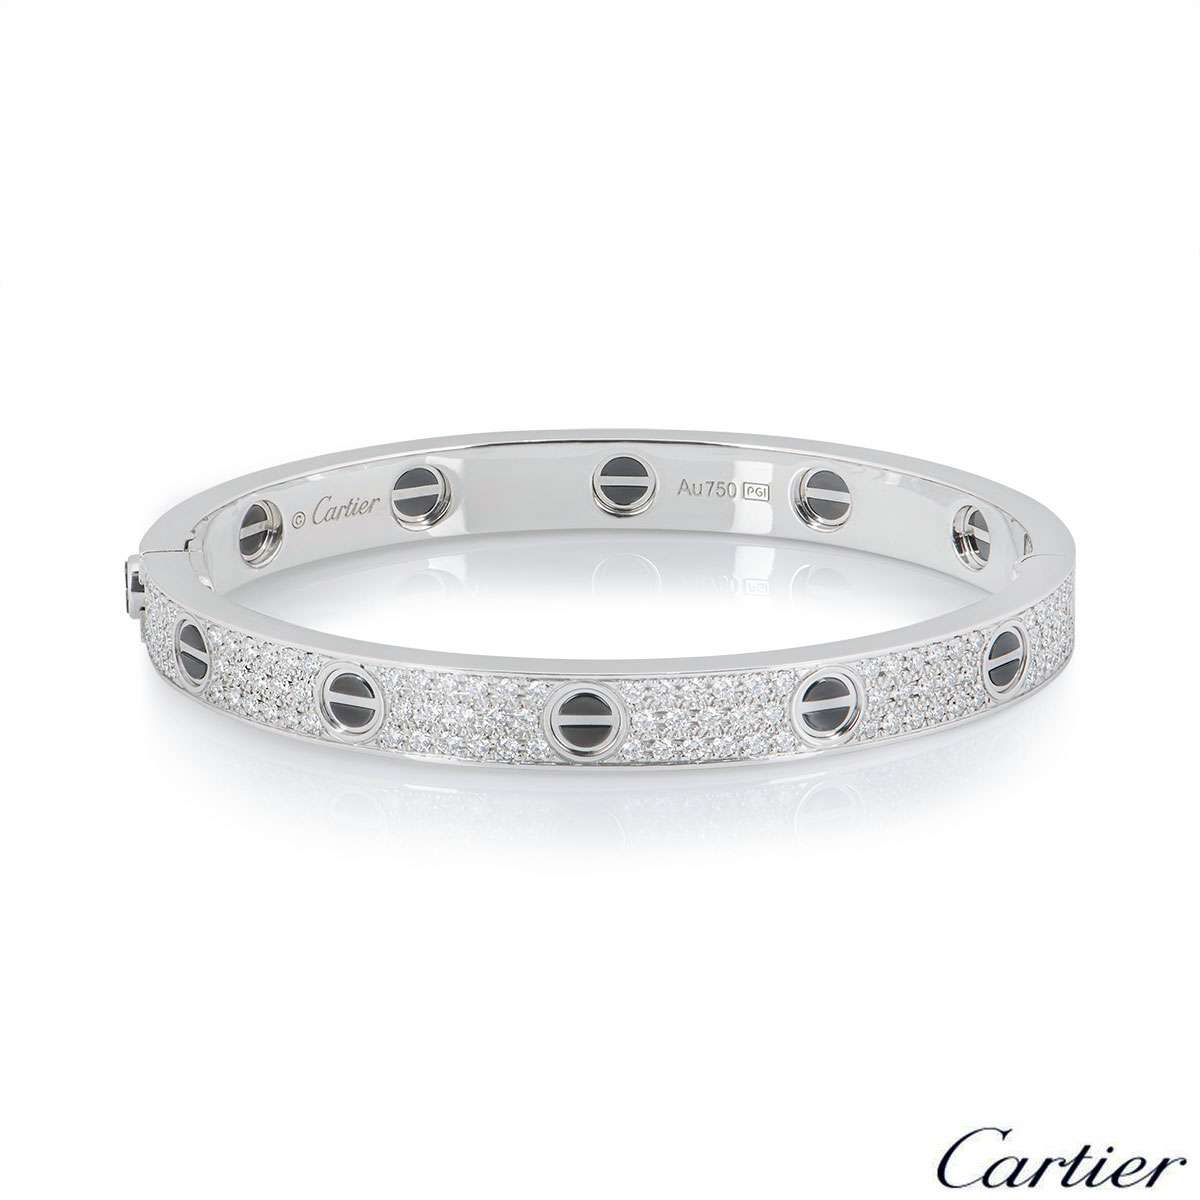 Cartier 'Love' White Gold Diamond Bracelet – CIRCA